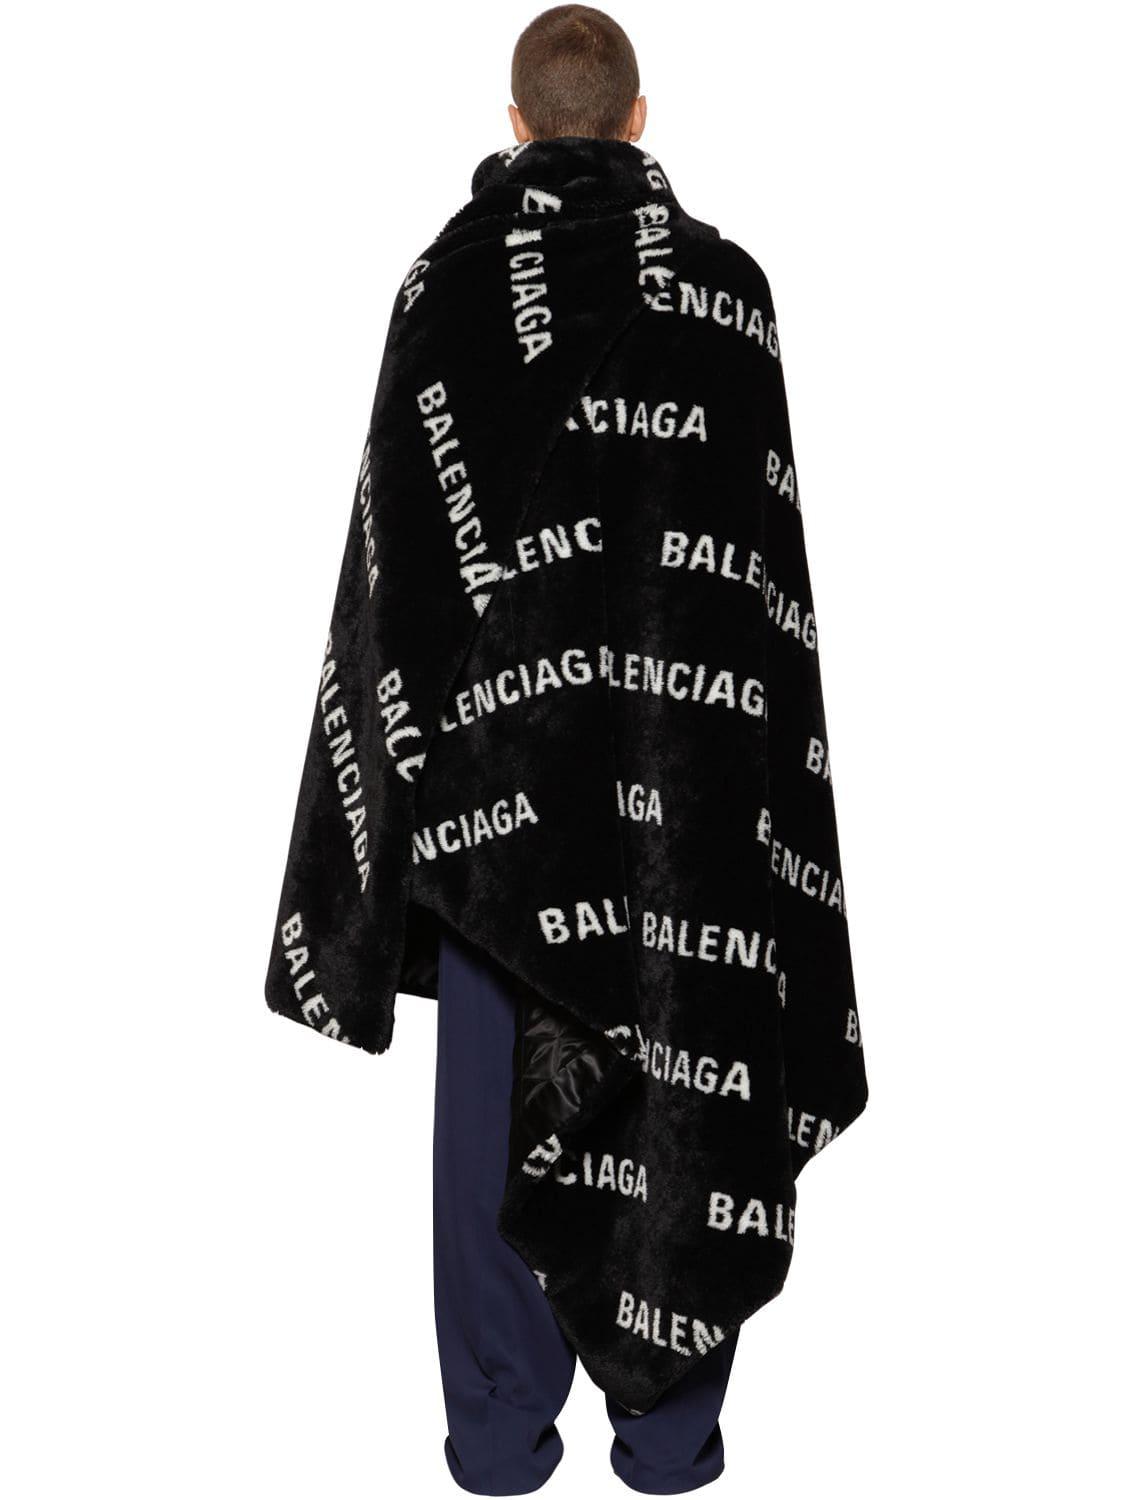 Balenciaga Oversize Faux Fur Logo Blanket in Black for Men - Lyst